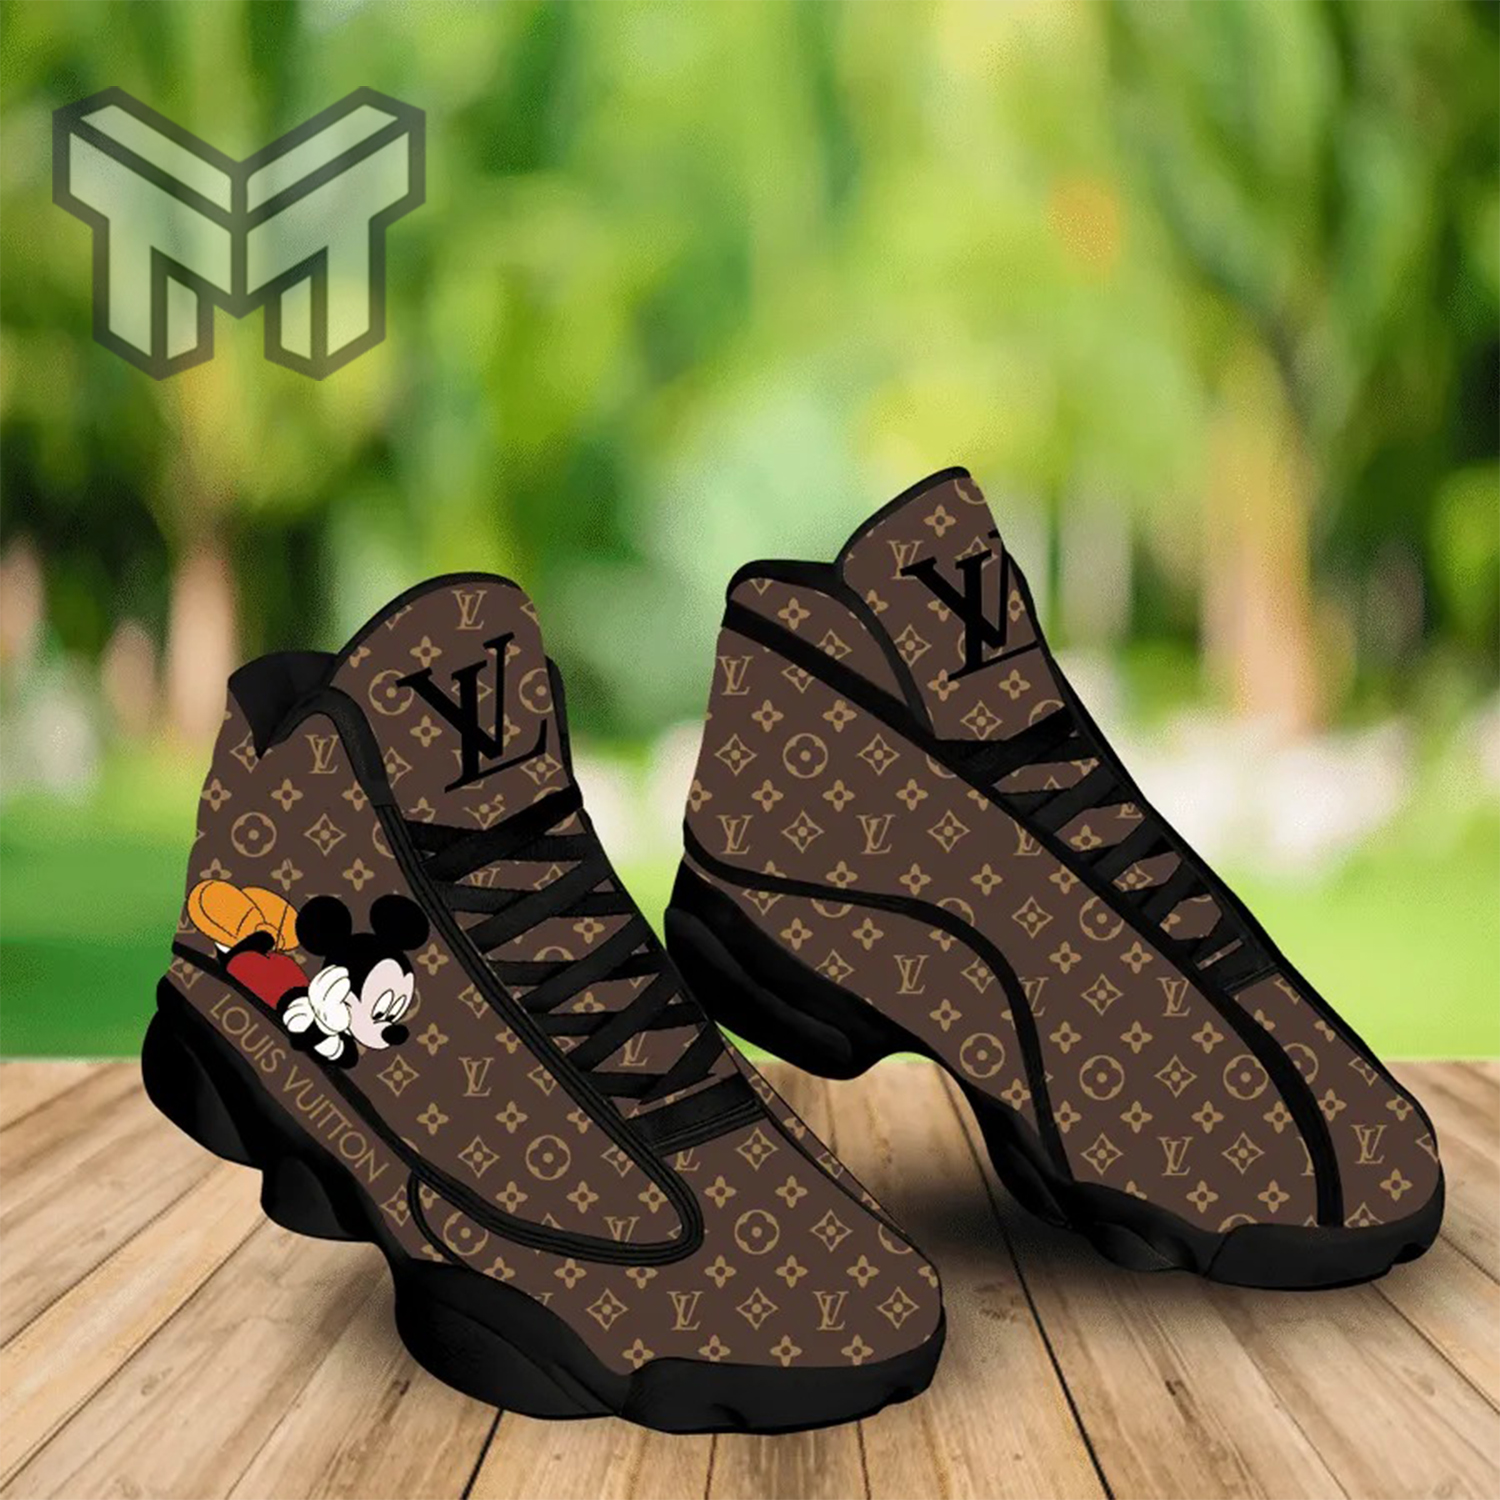 Louis Vuitton Mickey Mouse Disney Air Jordan 13 Sneakers Shoes